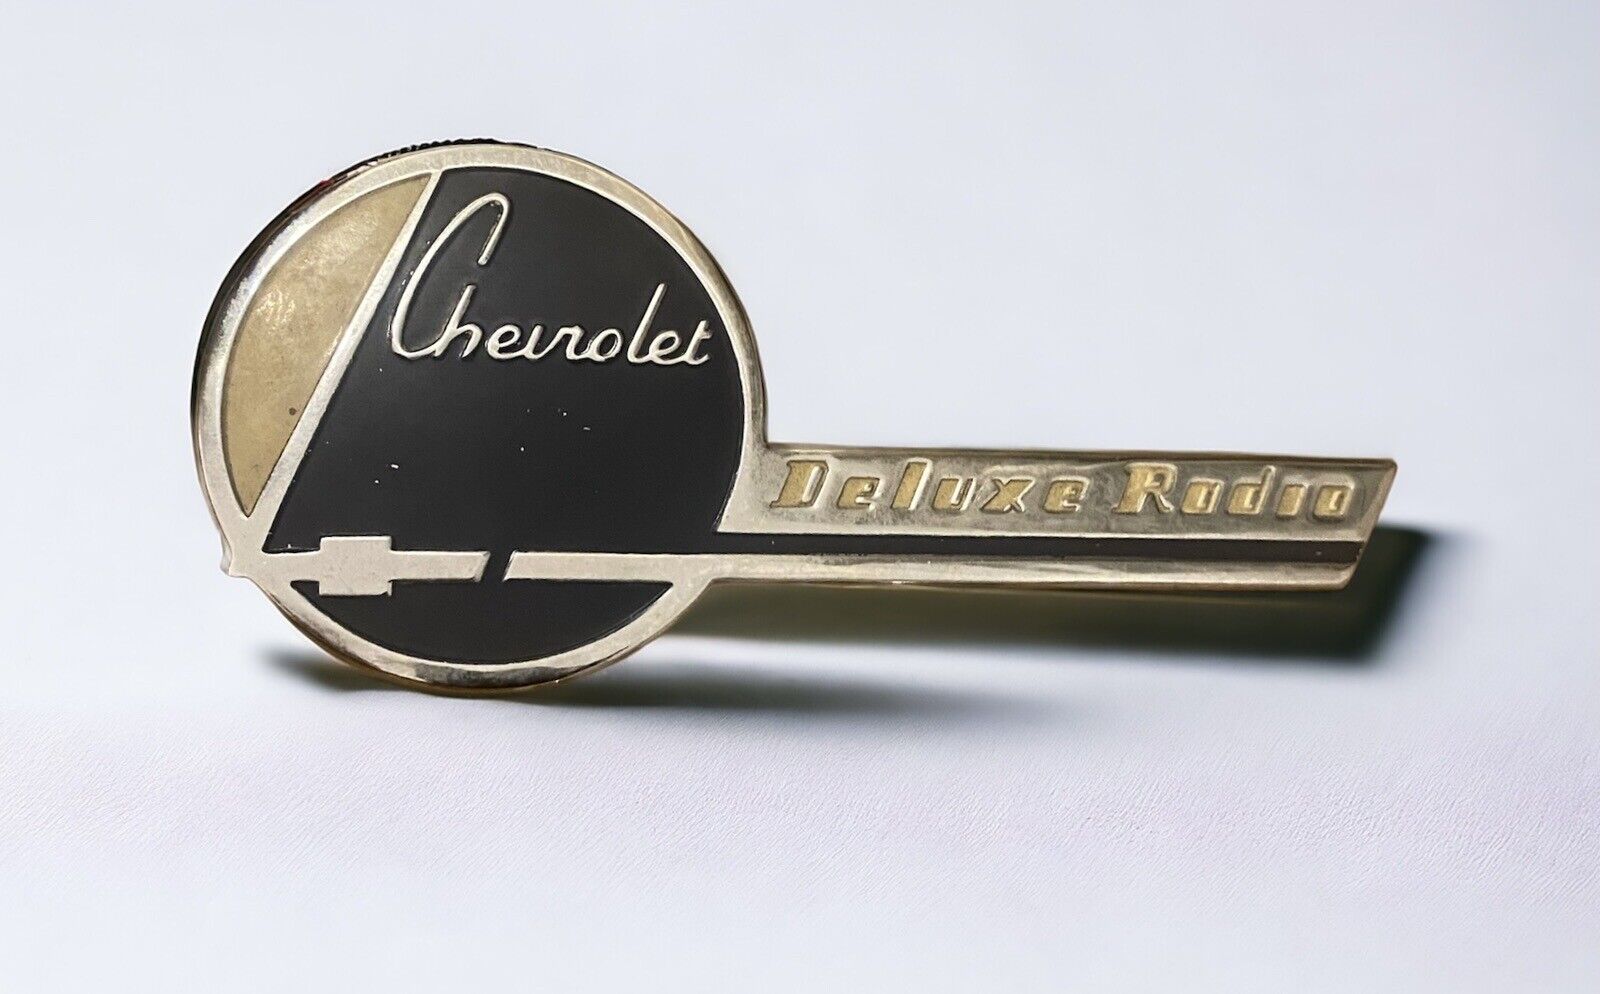 1938 Chevrolet Deluxe Radio Emblem - Original - Shows Wear